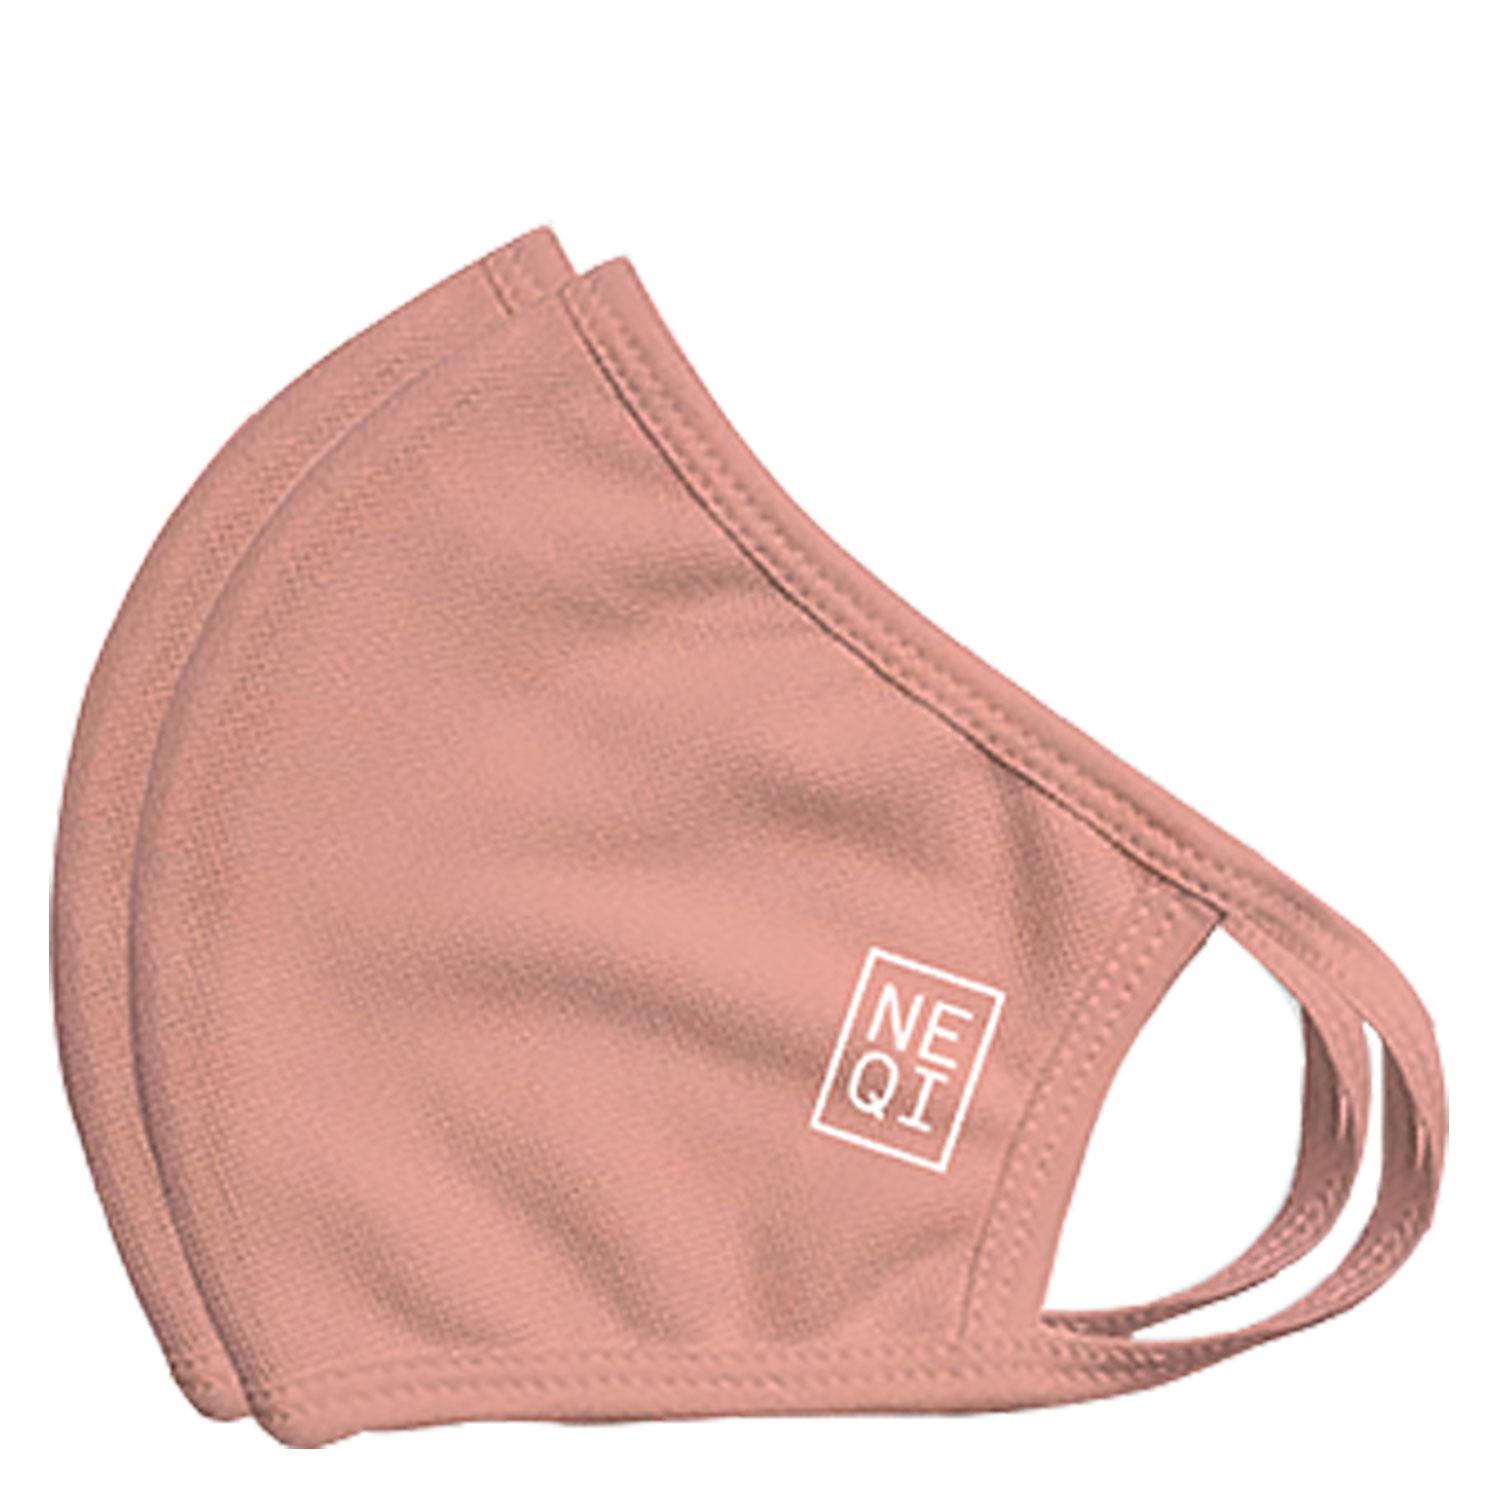 NEQI - Community Face Coverings, Pink, S-M